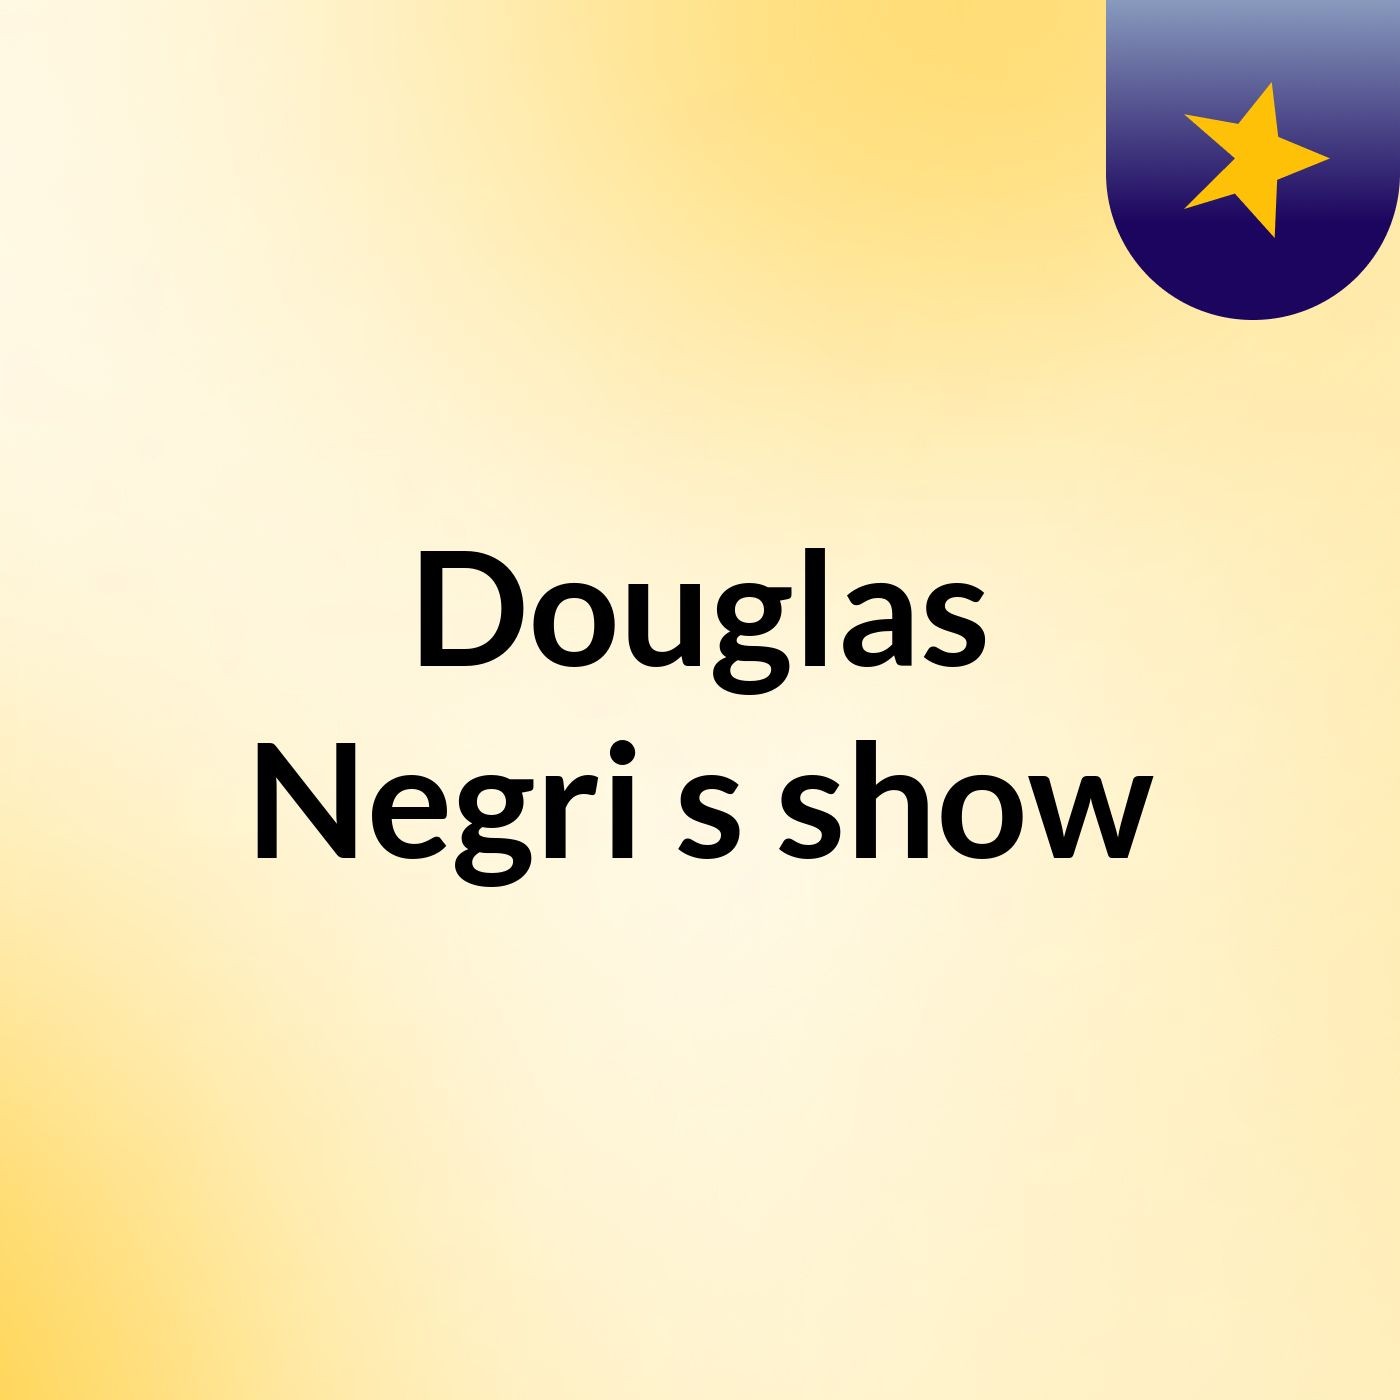 Douglas Negri's show